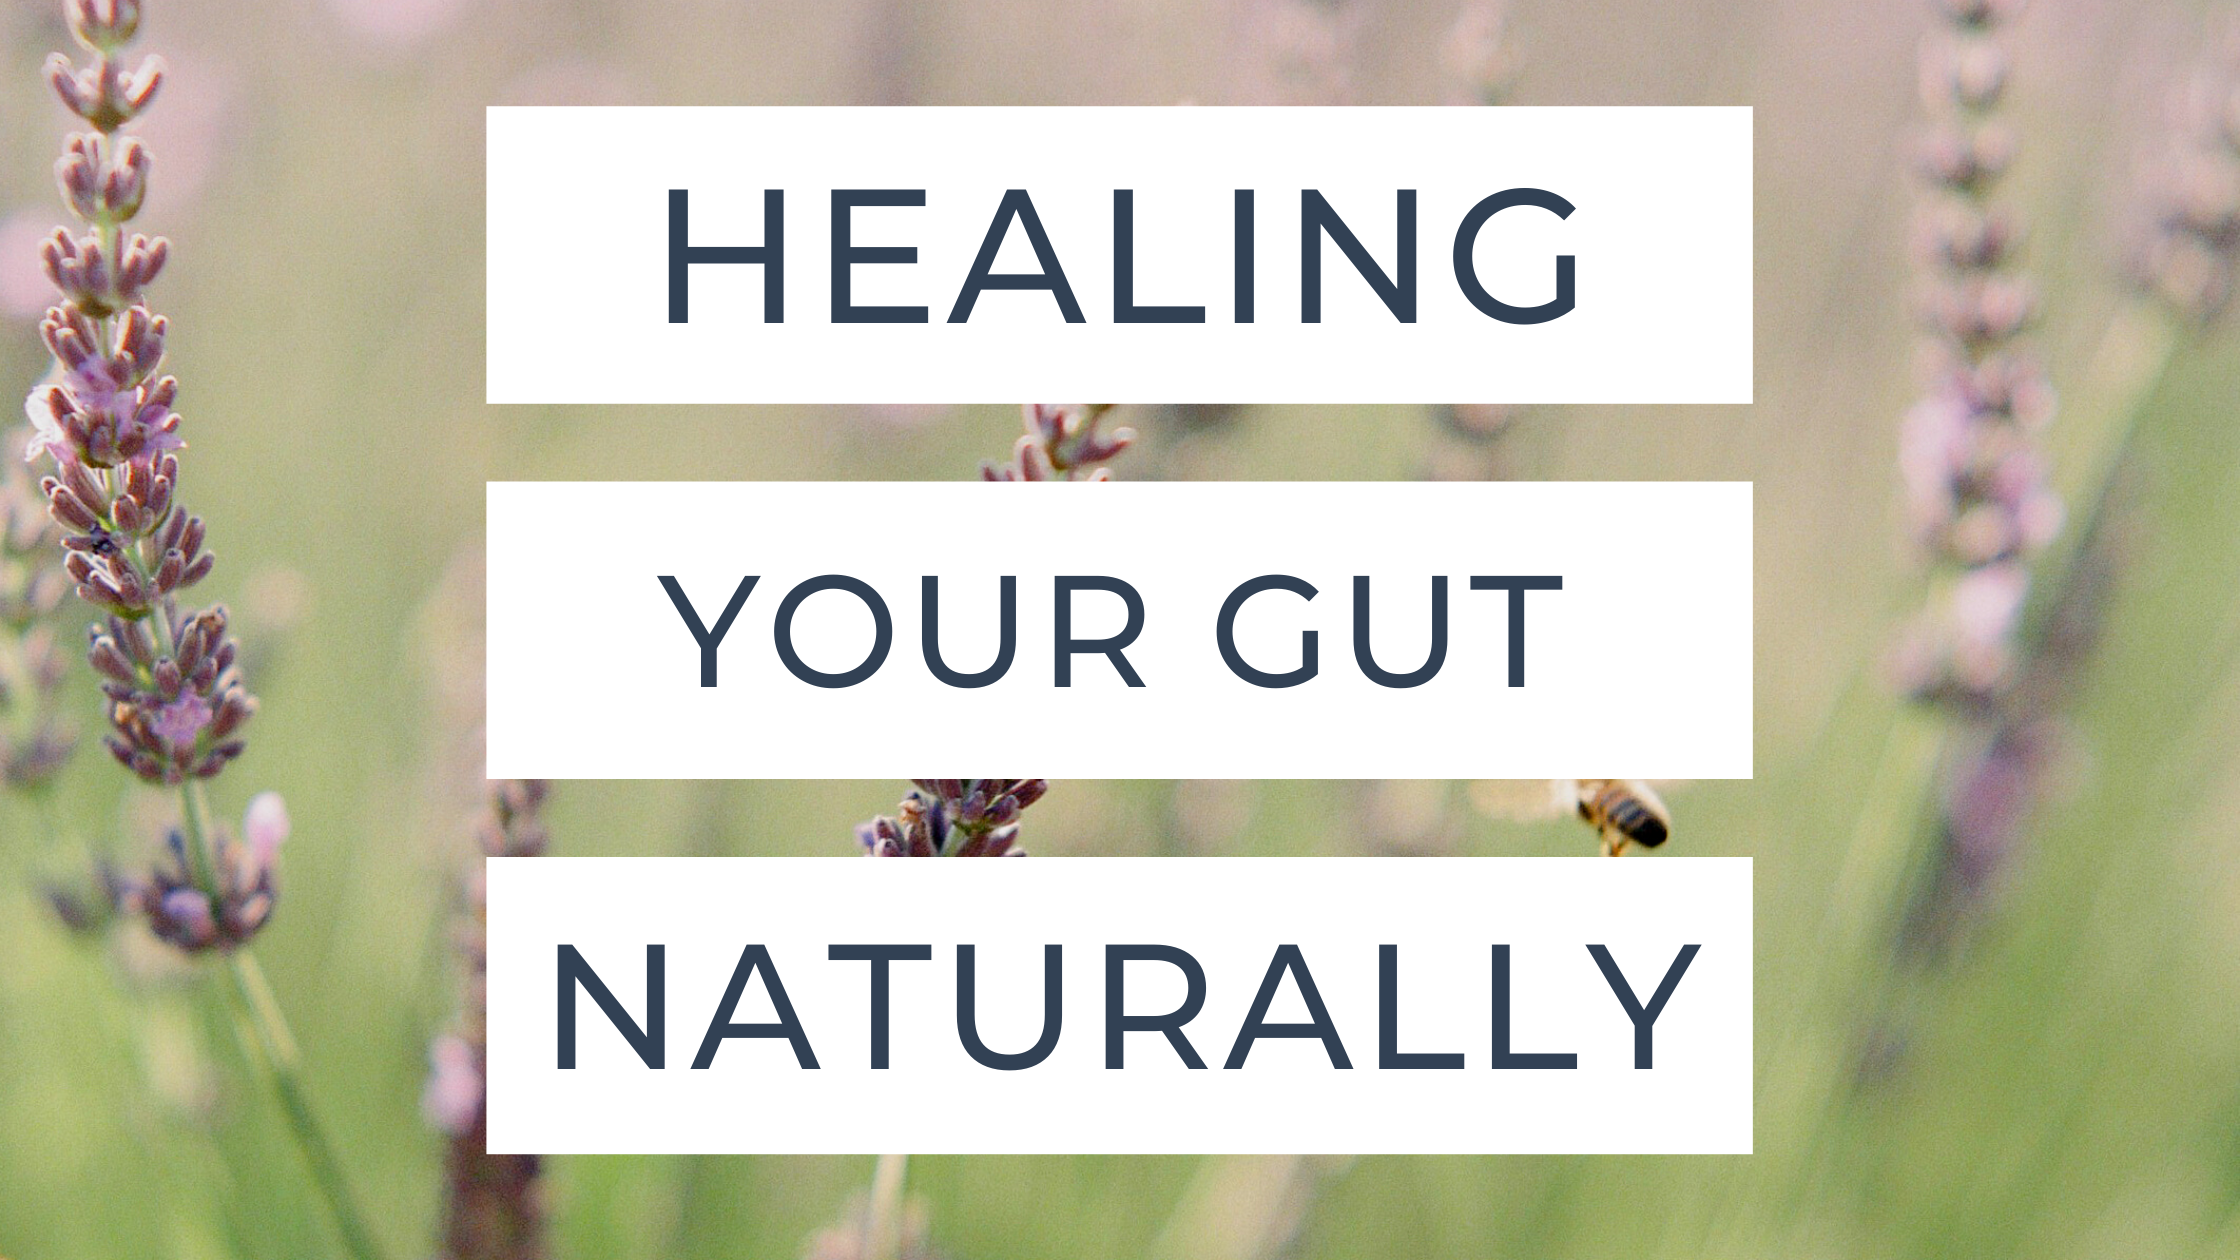 Healing your gut naturally